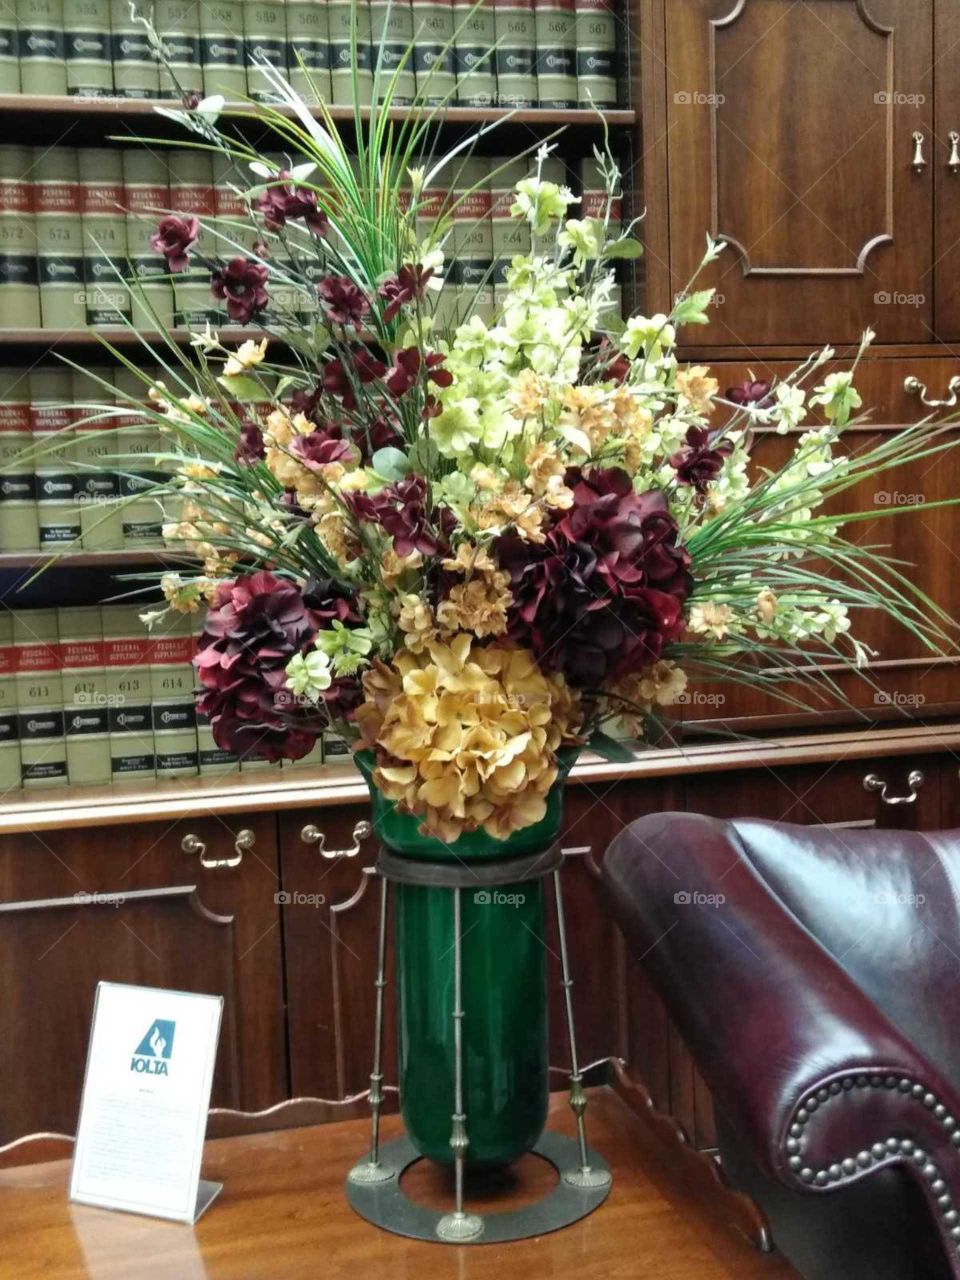 I loooove the vase in this photo beautiful flower arrangement